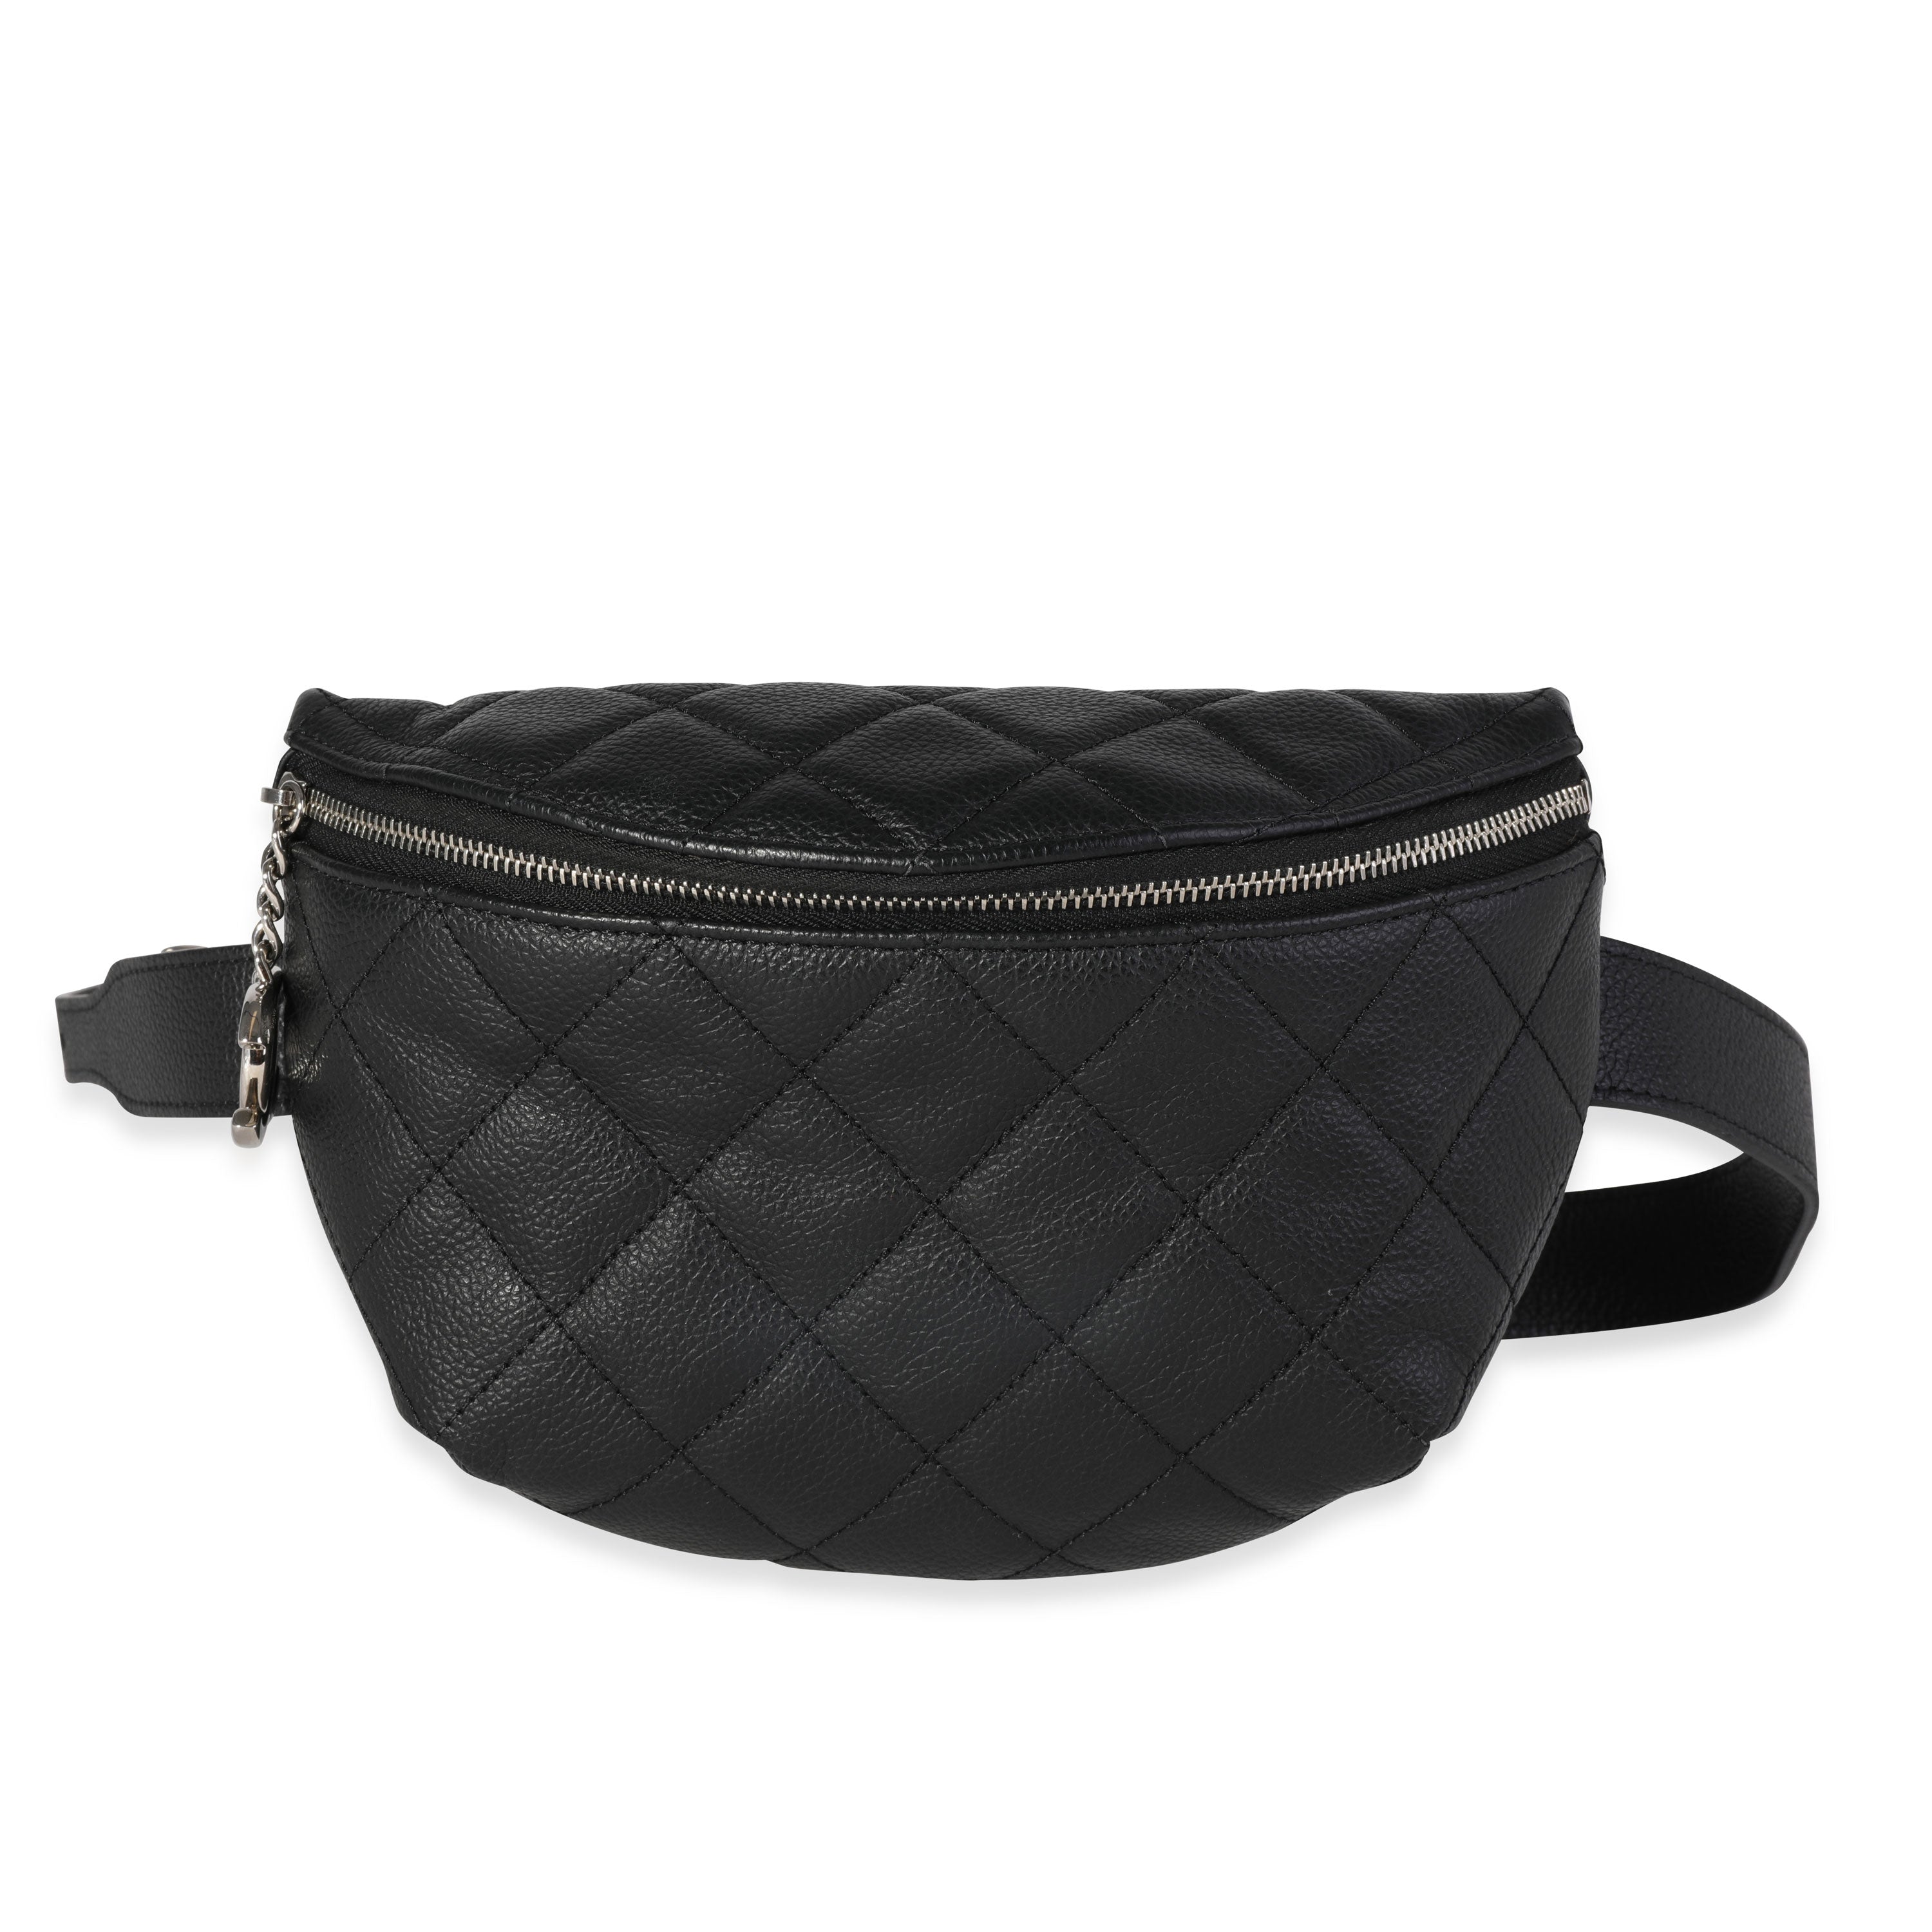 chanel black waist bag leather